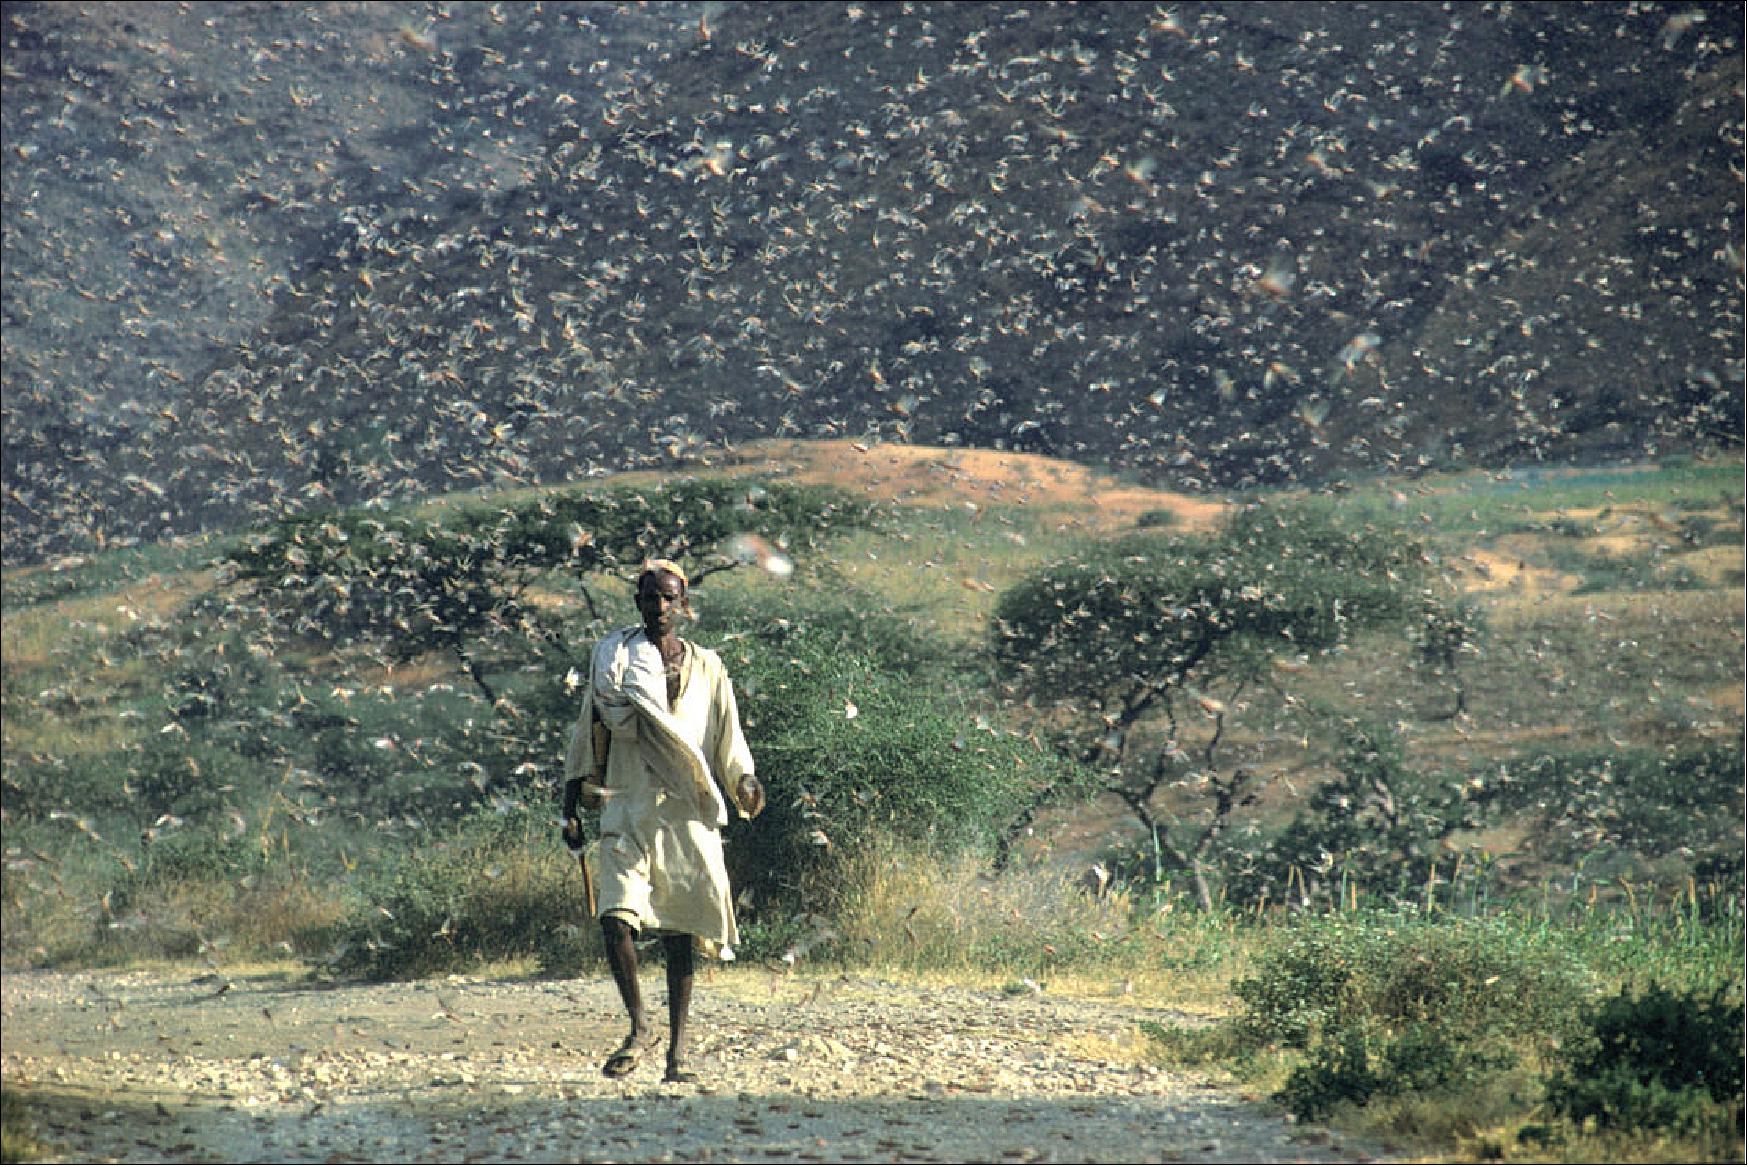 Figure 48: Ethiopia, July 1968 during a desert locust outbreak (image credit: FAO/ G. Tortoli)